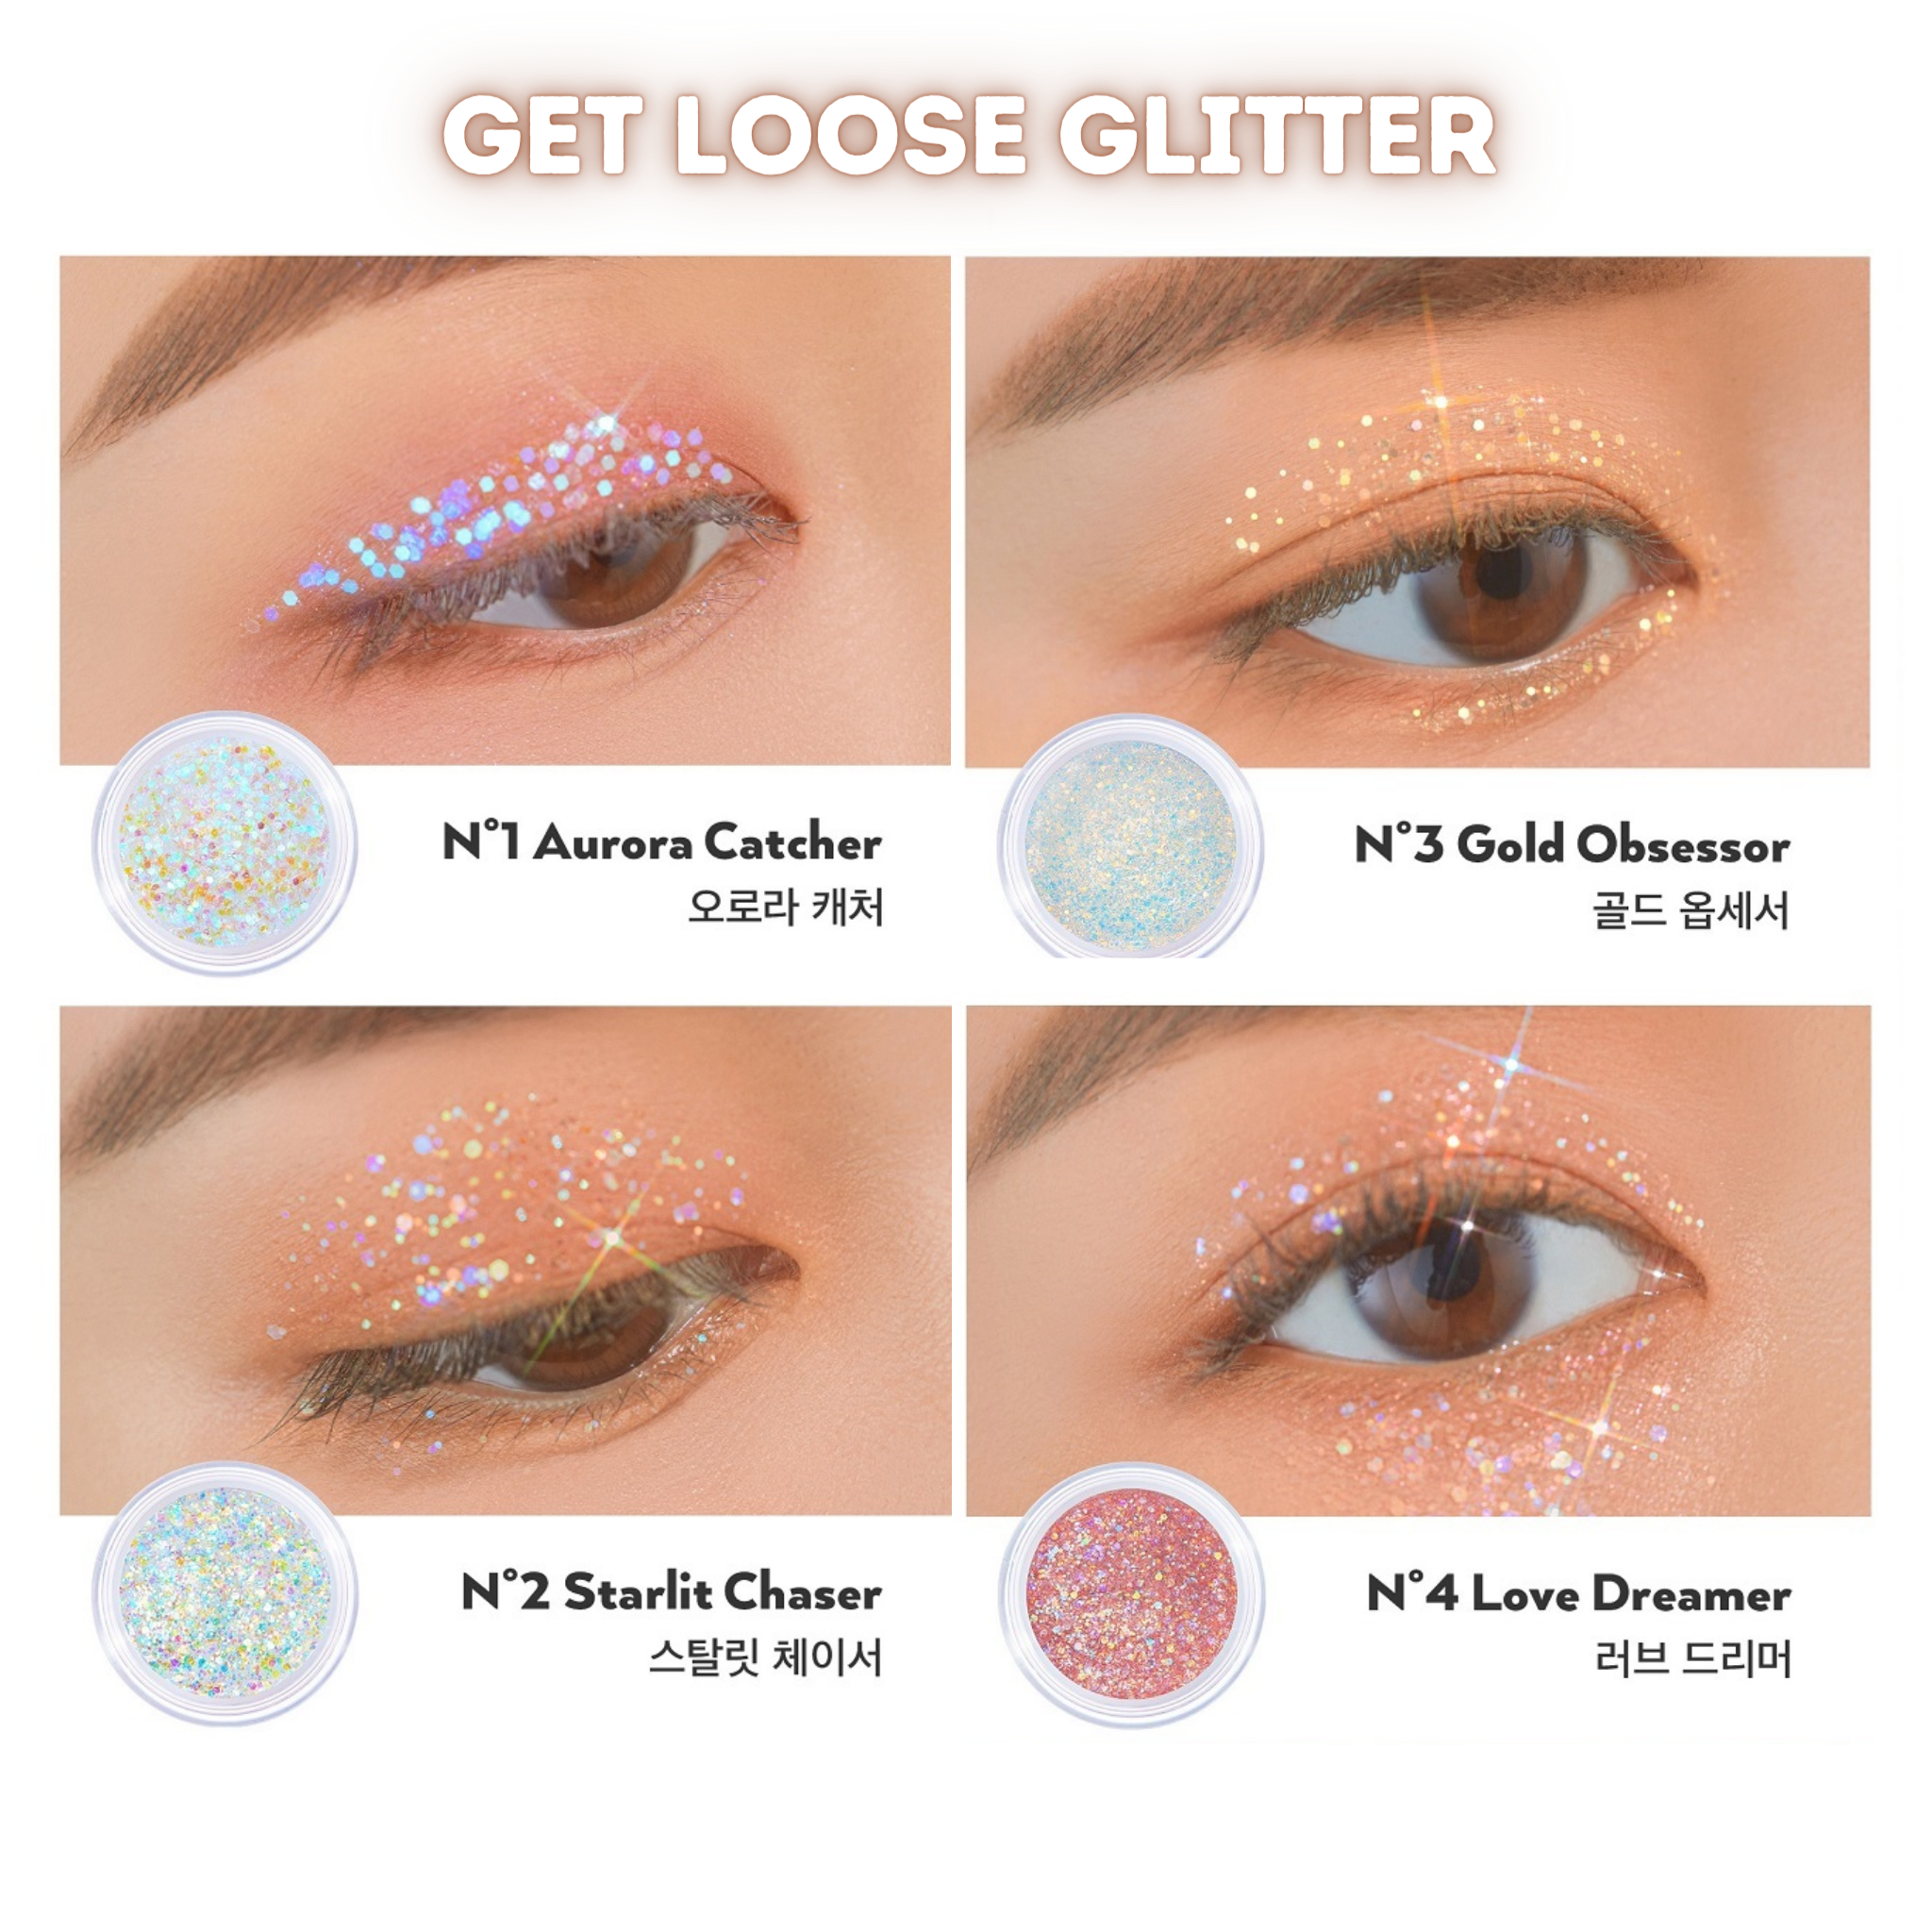 Get Loose Glitter Gel